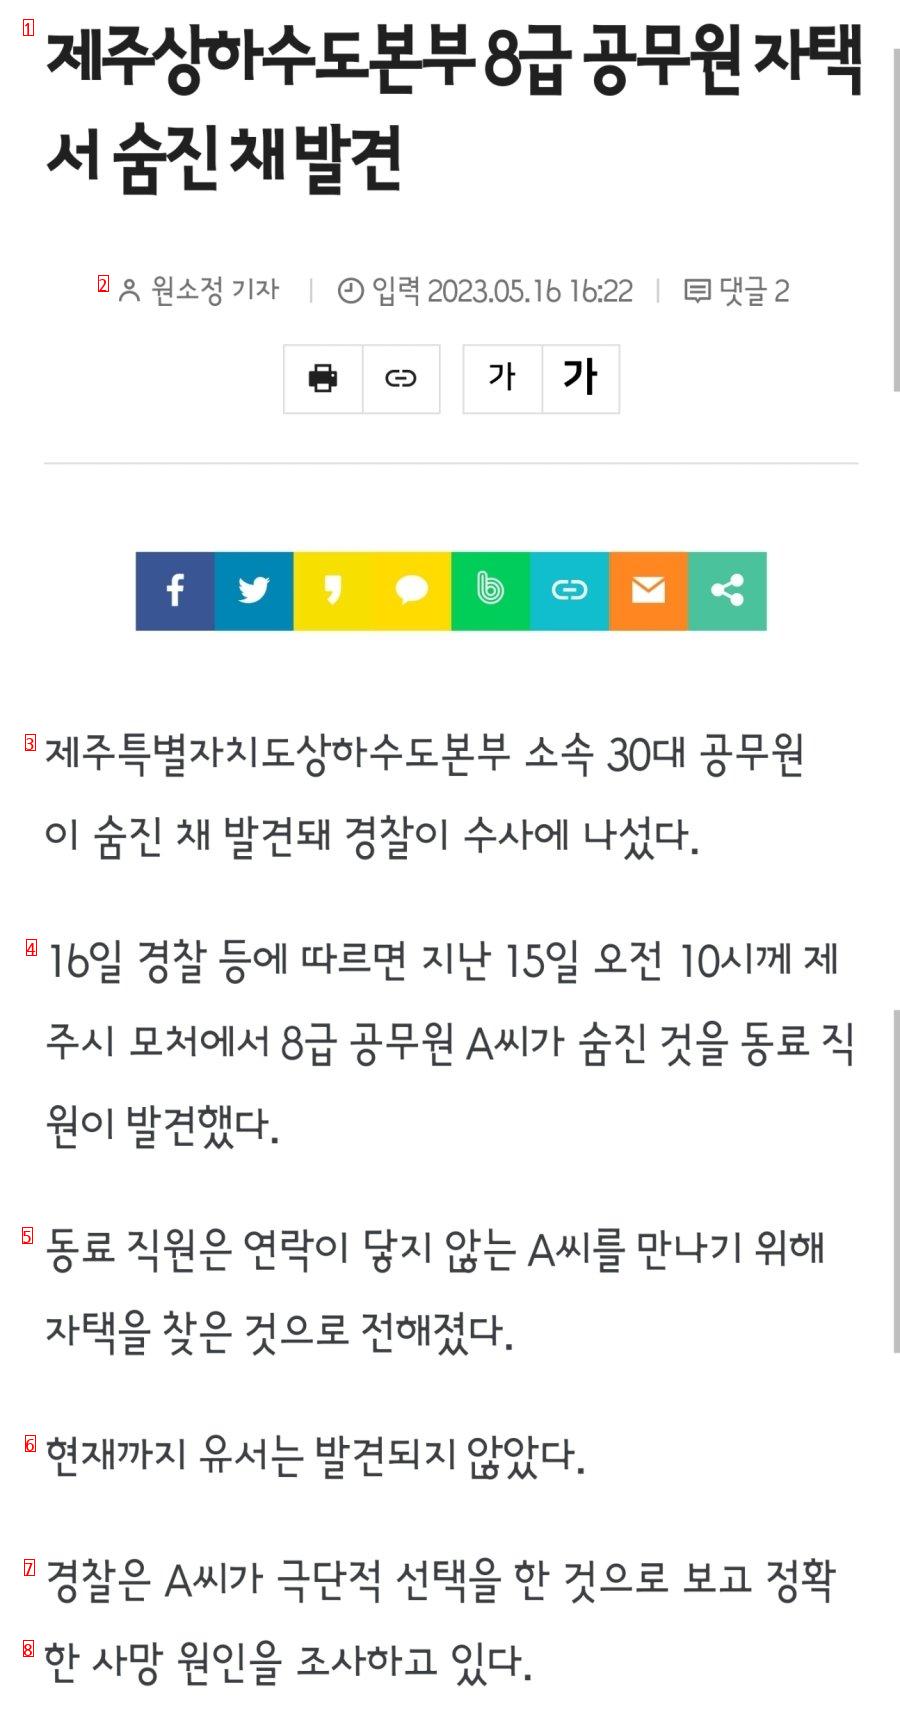 Jeju Island 8th grade civil servant suicide gisa